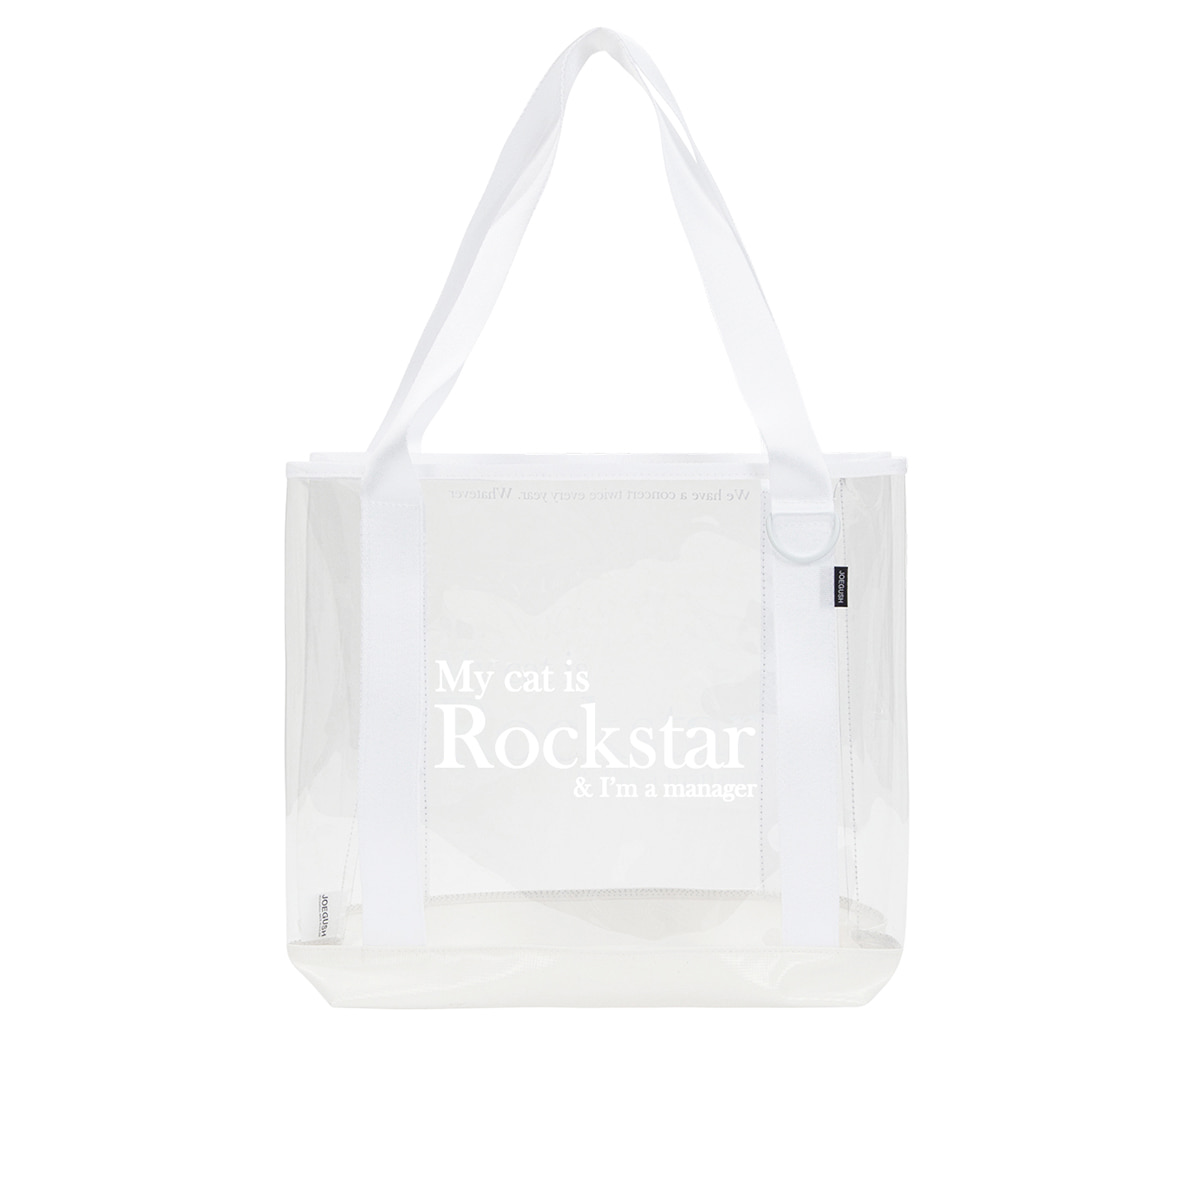 Rockstar pvc tote bag (White/White)